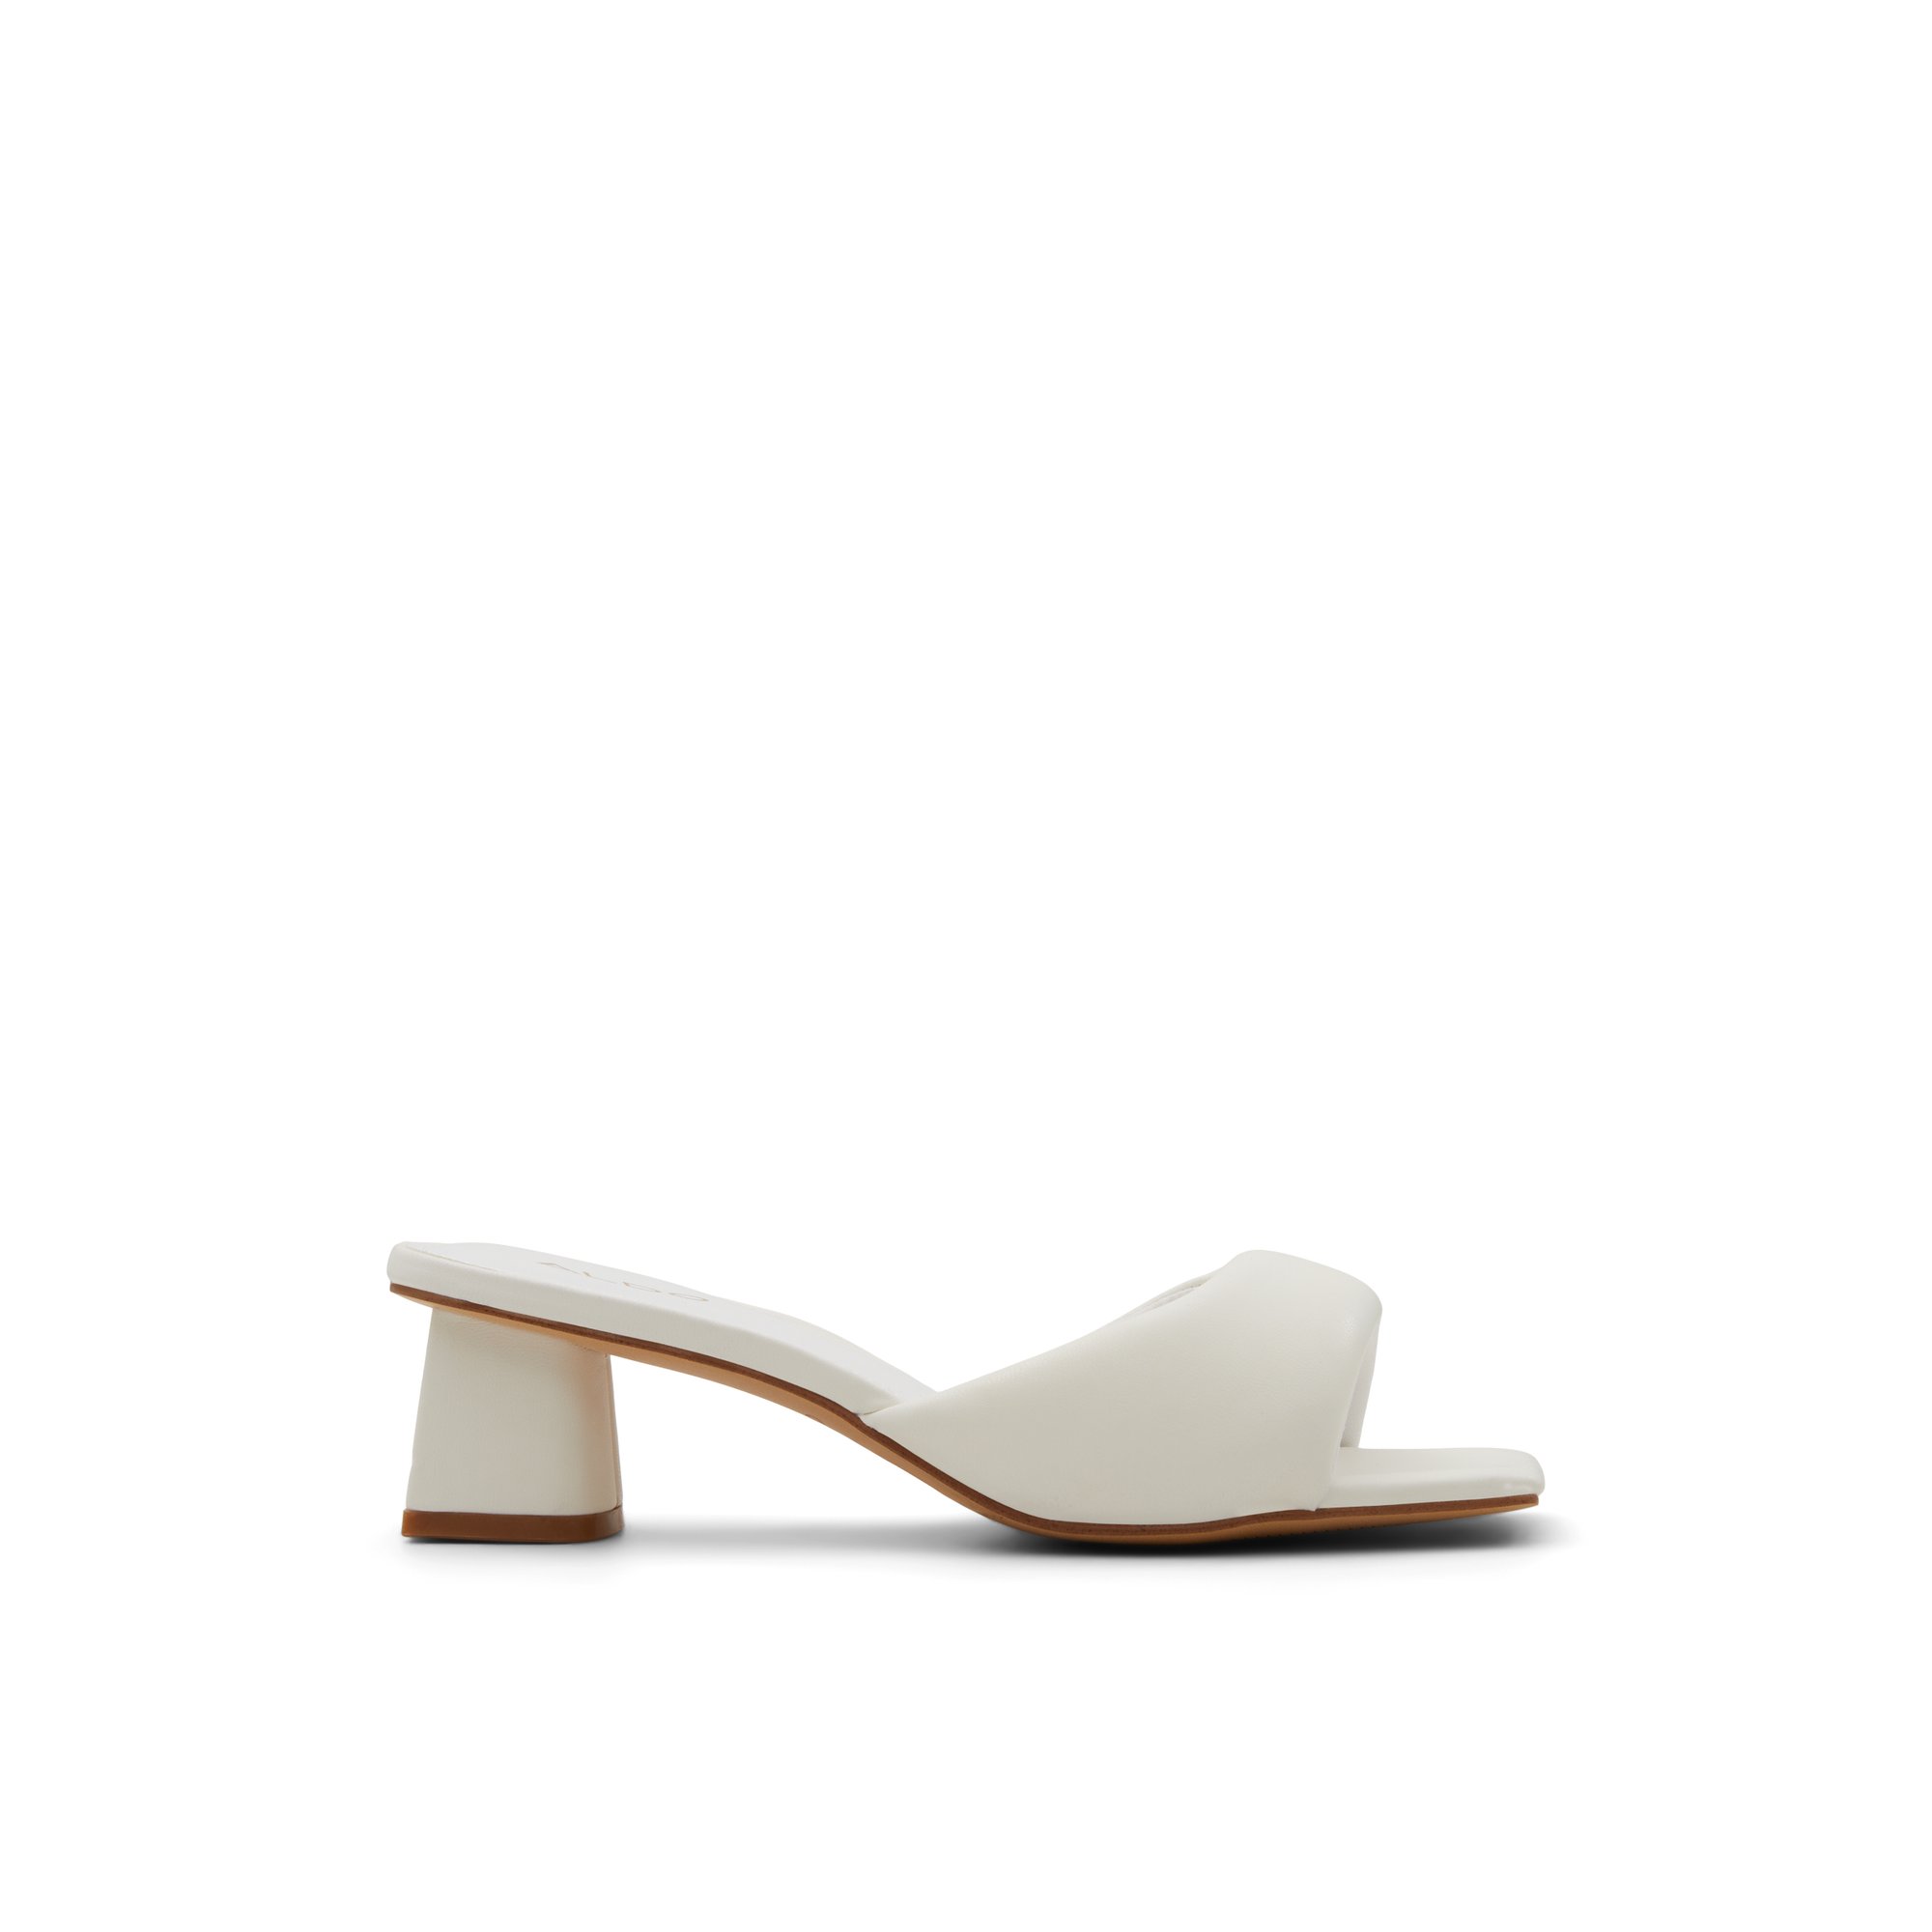 ALDO Aneka - Women's Kitten Heel - White